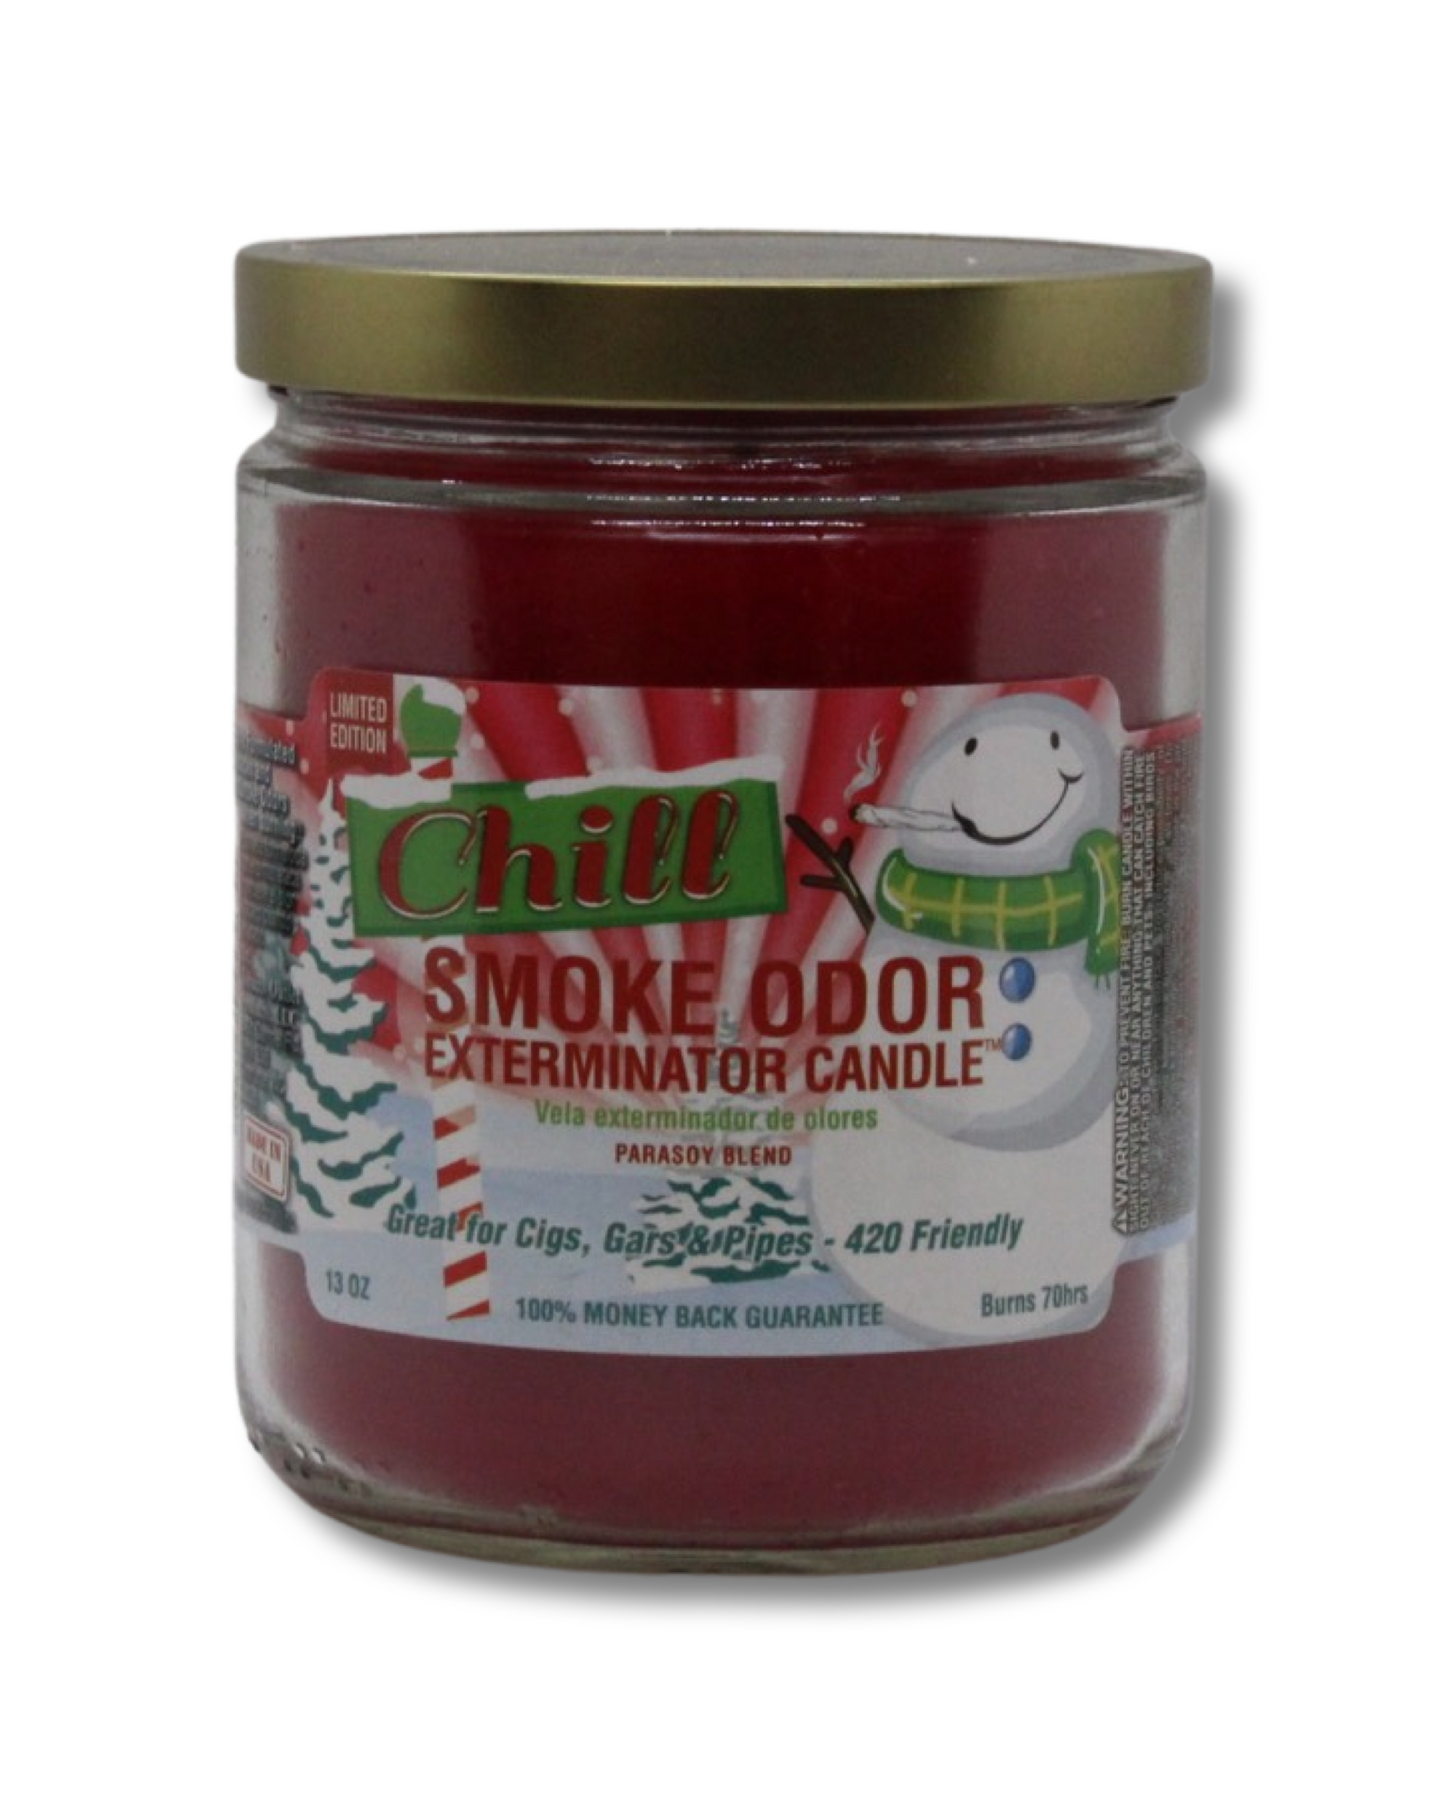 Smoke Odor Exterminator Candle Chill